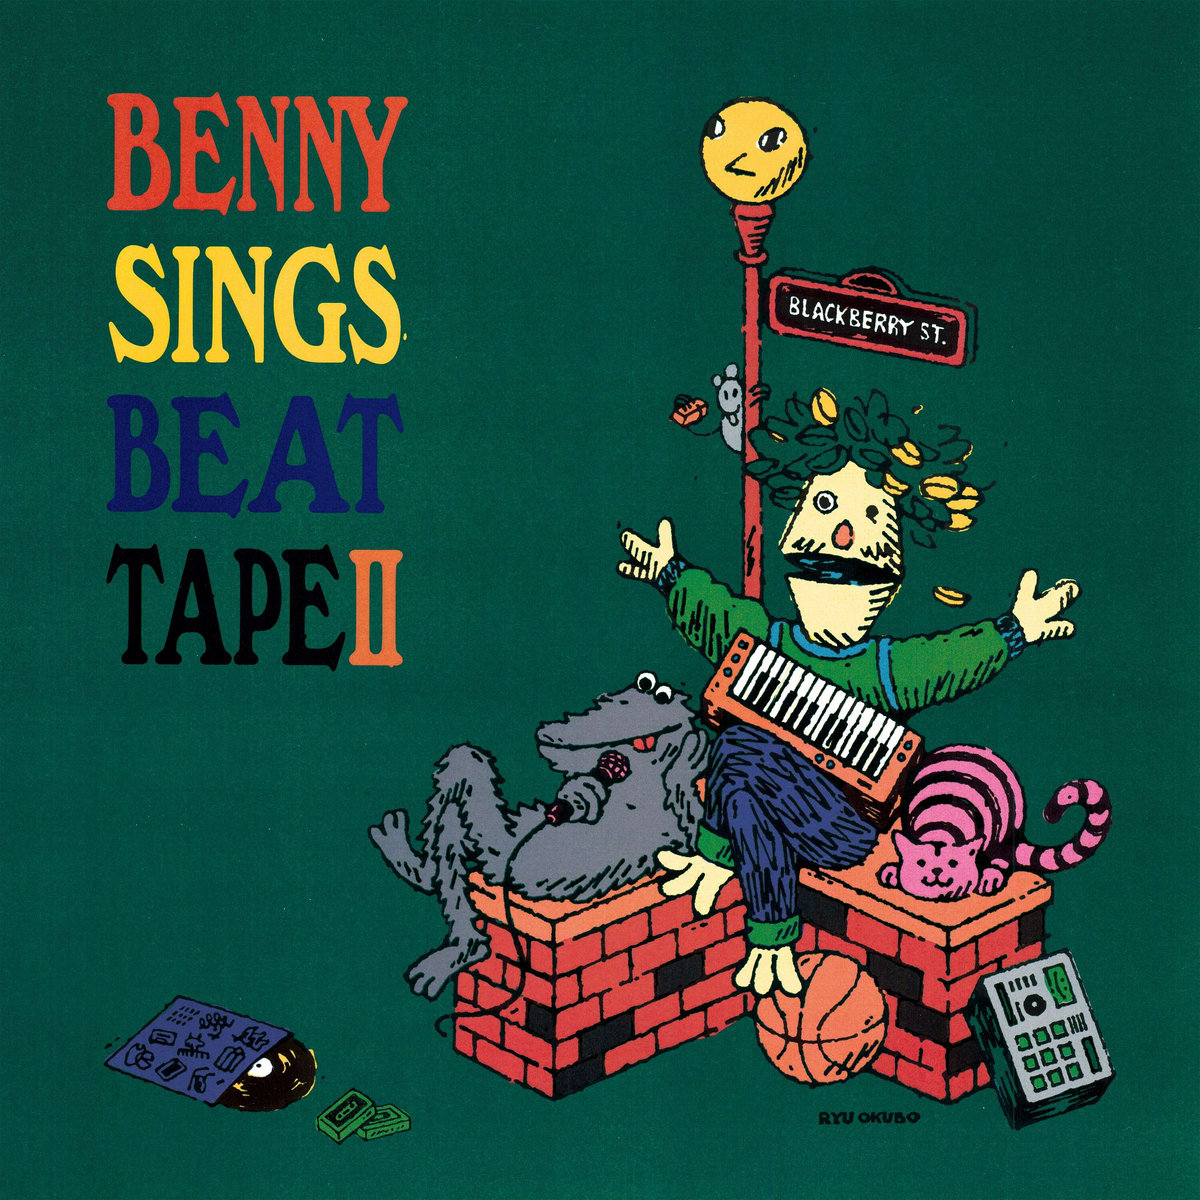 Benny Sings Beat tape II cover artwork